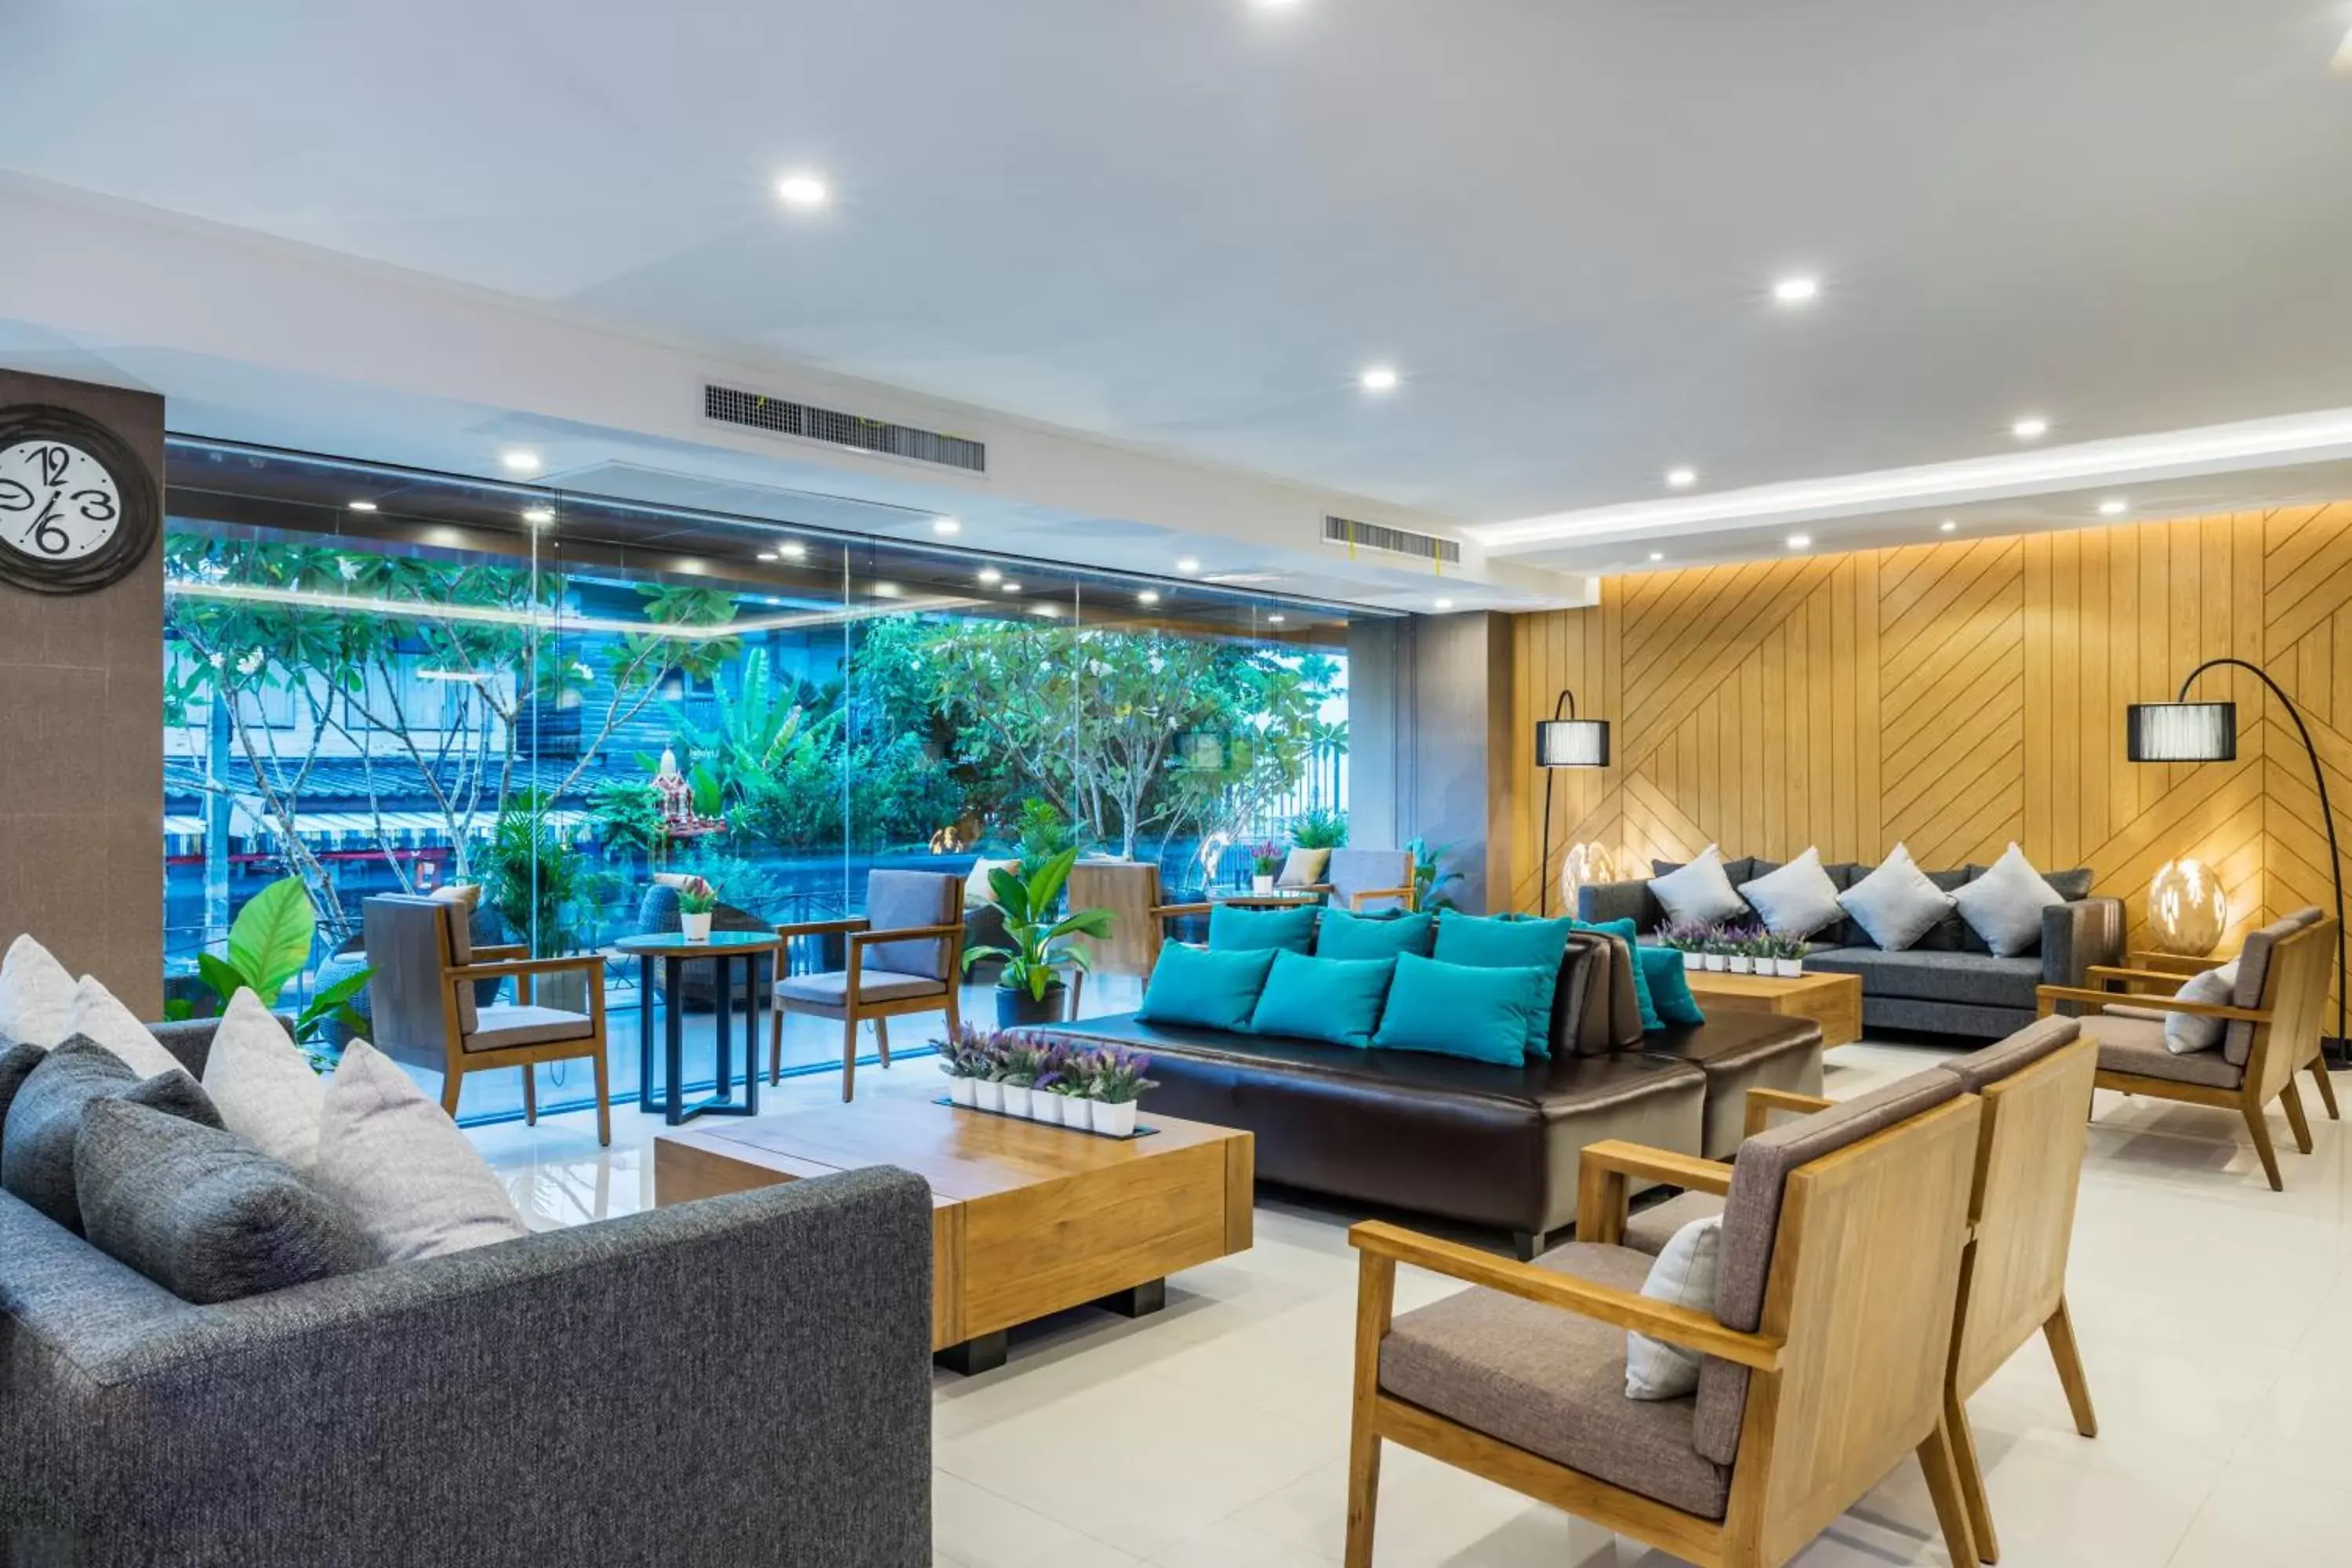 Communal lounge/ TV room, Lobby/Reception in Livotel Hotel Hua Mak Bangkok